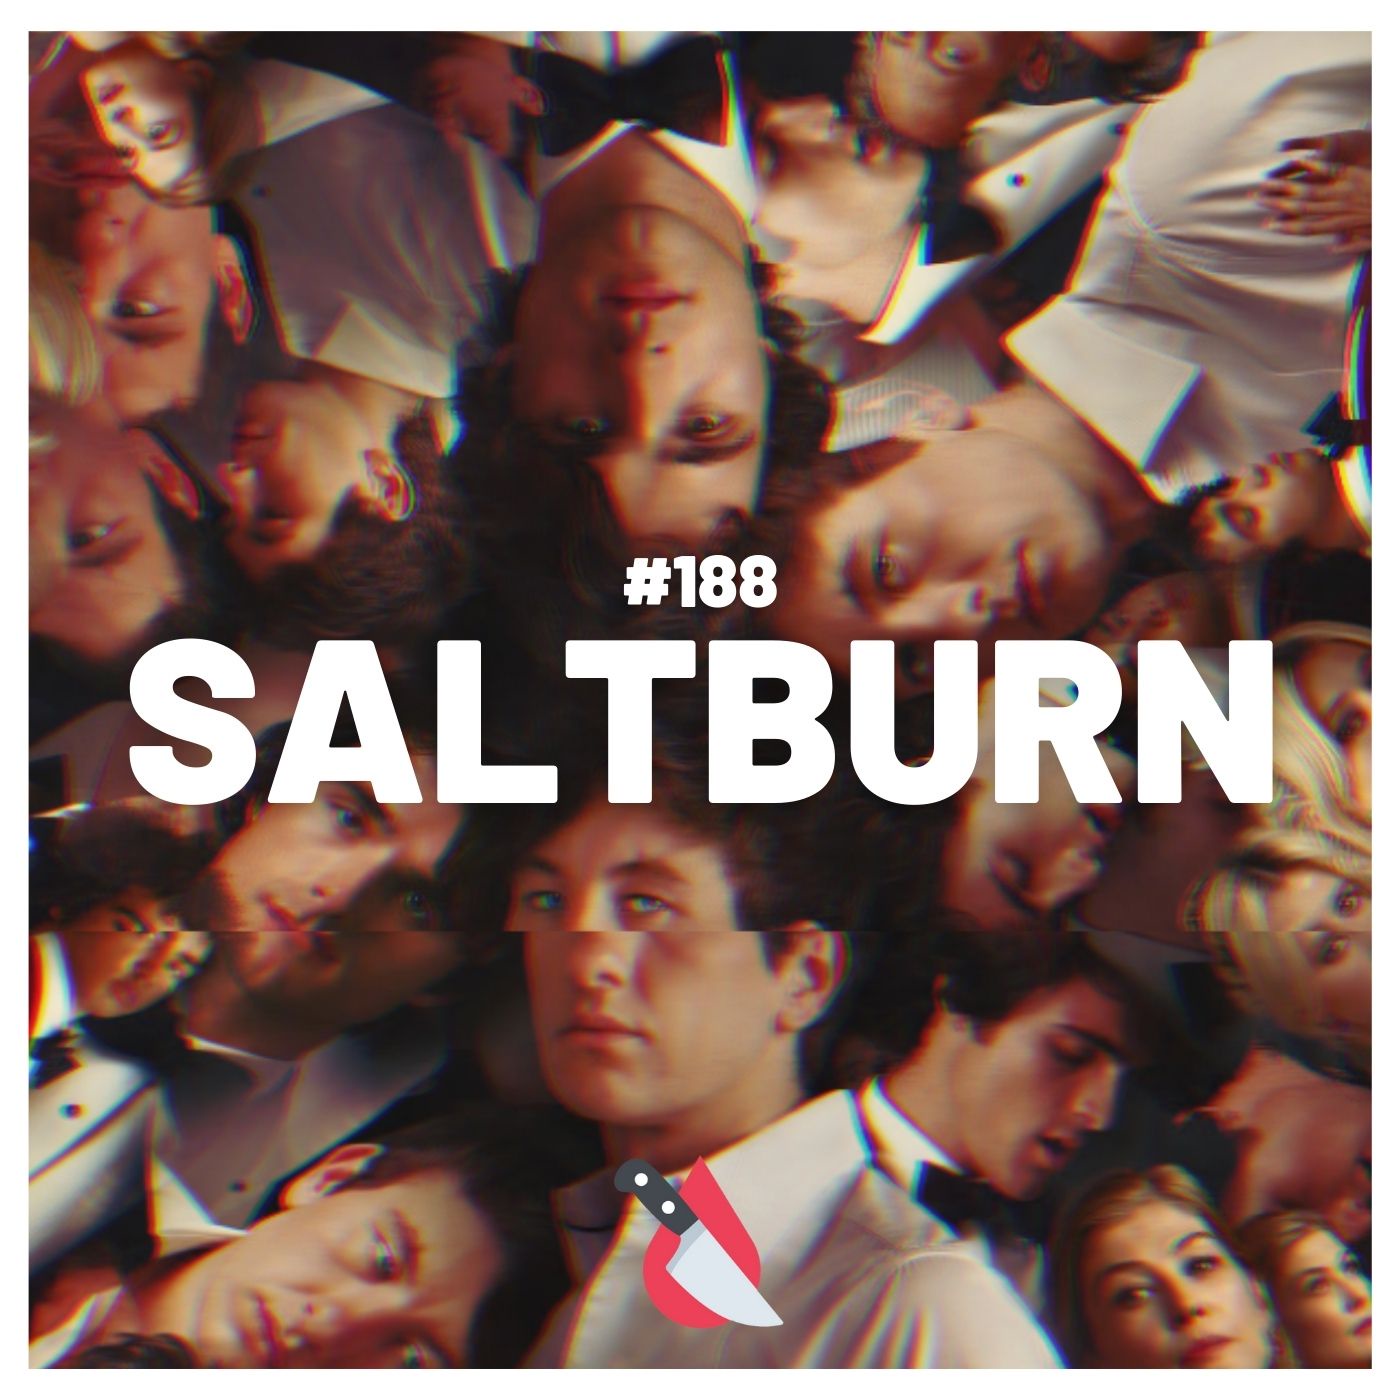 #188 - Saltburn